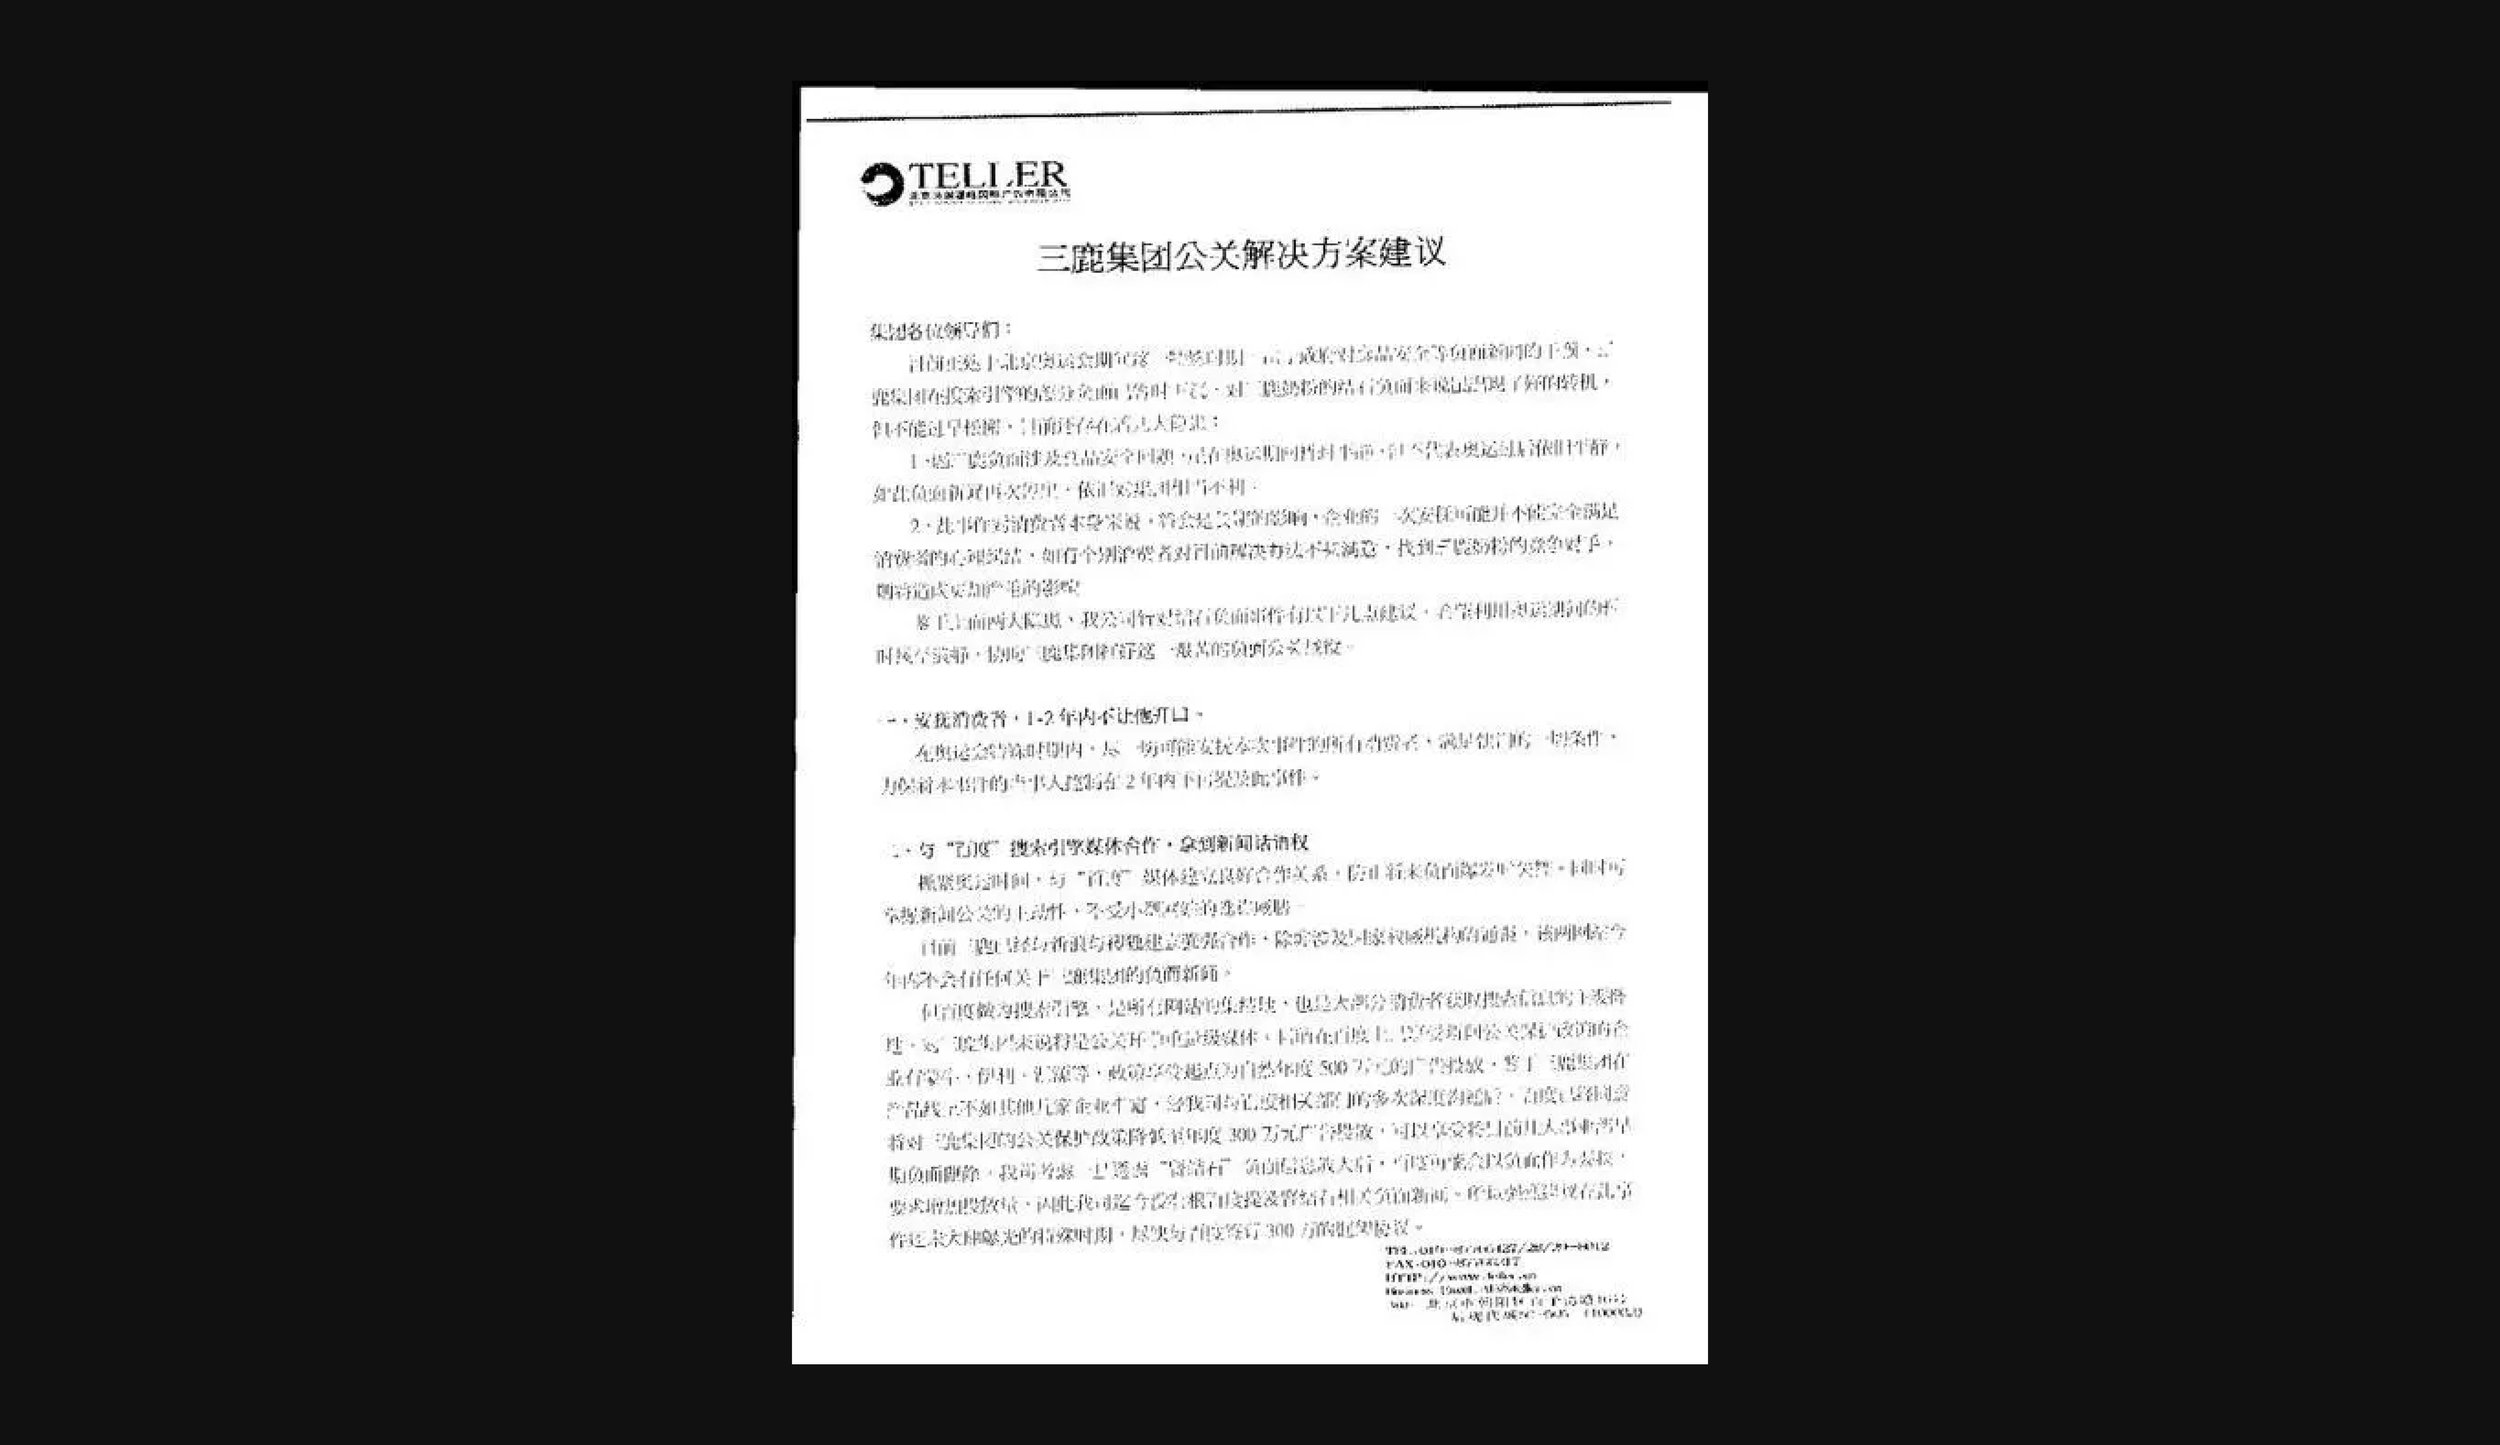  Alleged PR solution letter, allegedly written by Beijing Teller International Advertising Co. 